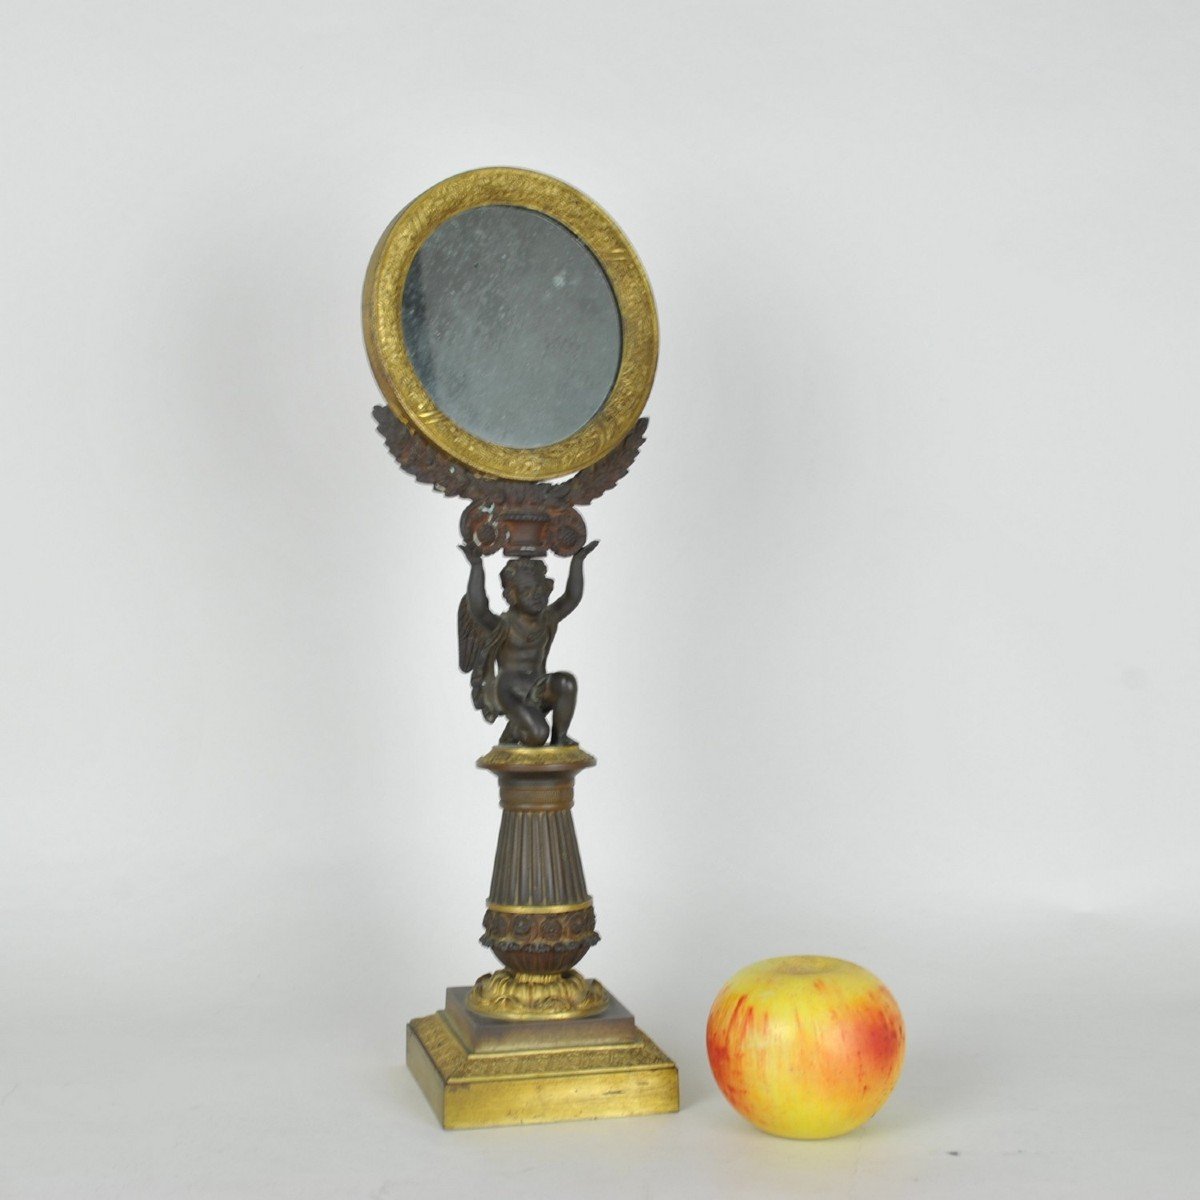 Bronze Table Mirror, Restoration Period, XIXth Century